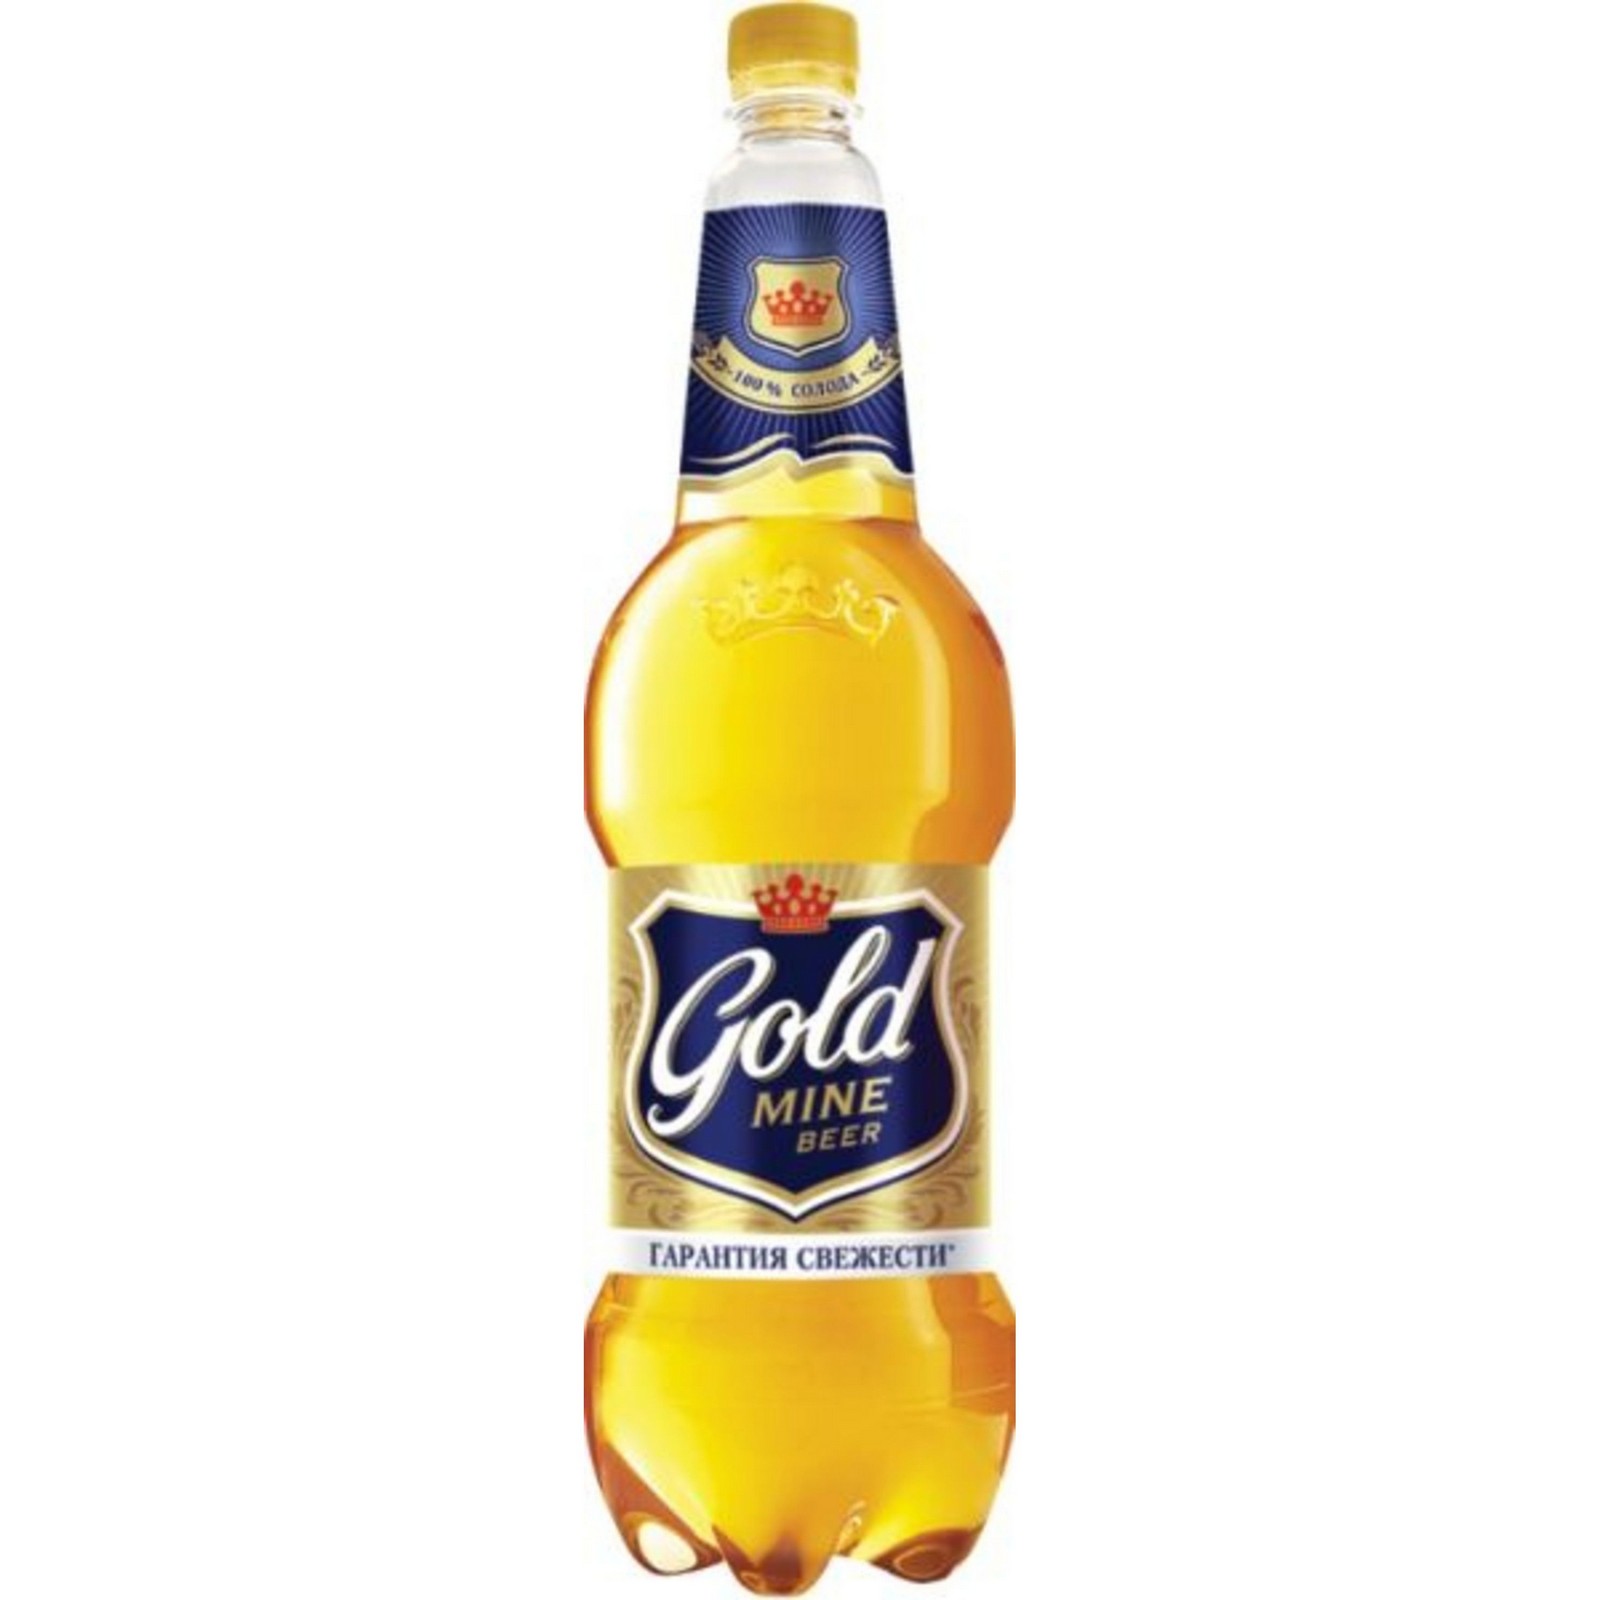 Gold beer. Пиво "Голд майн бир" светлое 1,3л. ПЭТ/Б 4,6% Россия. Пиво Голд майн бир 1,35. Голд майн бир светлое 1.5 л. Голд майн бир 1.35л 4.6 светлое.